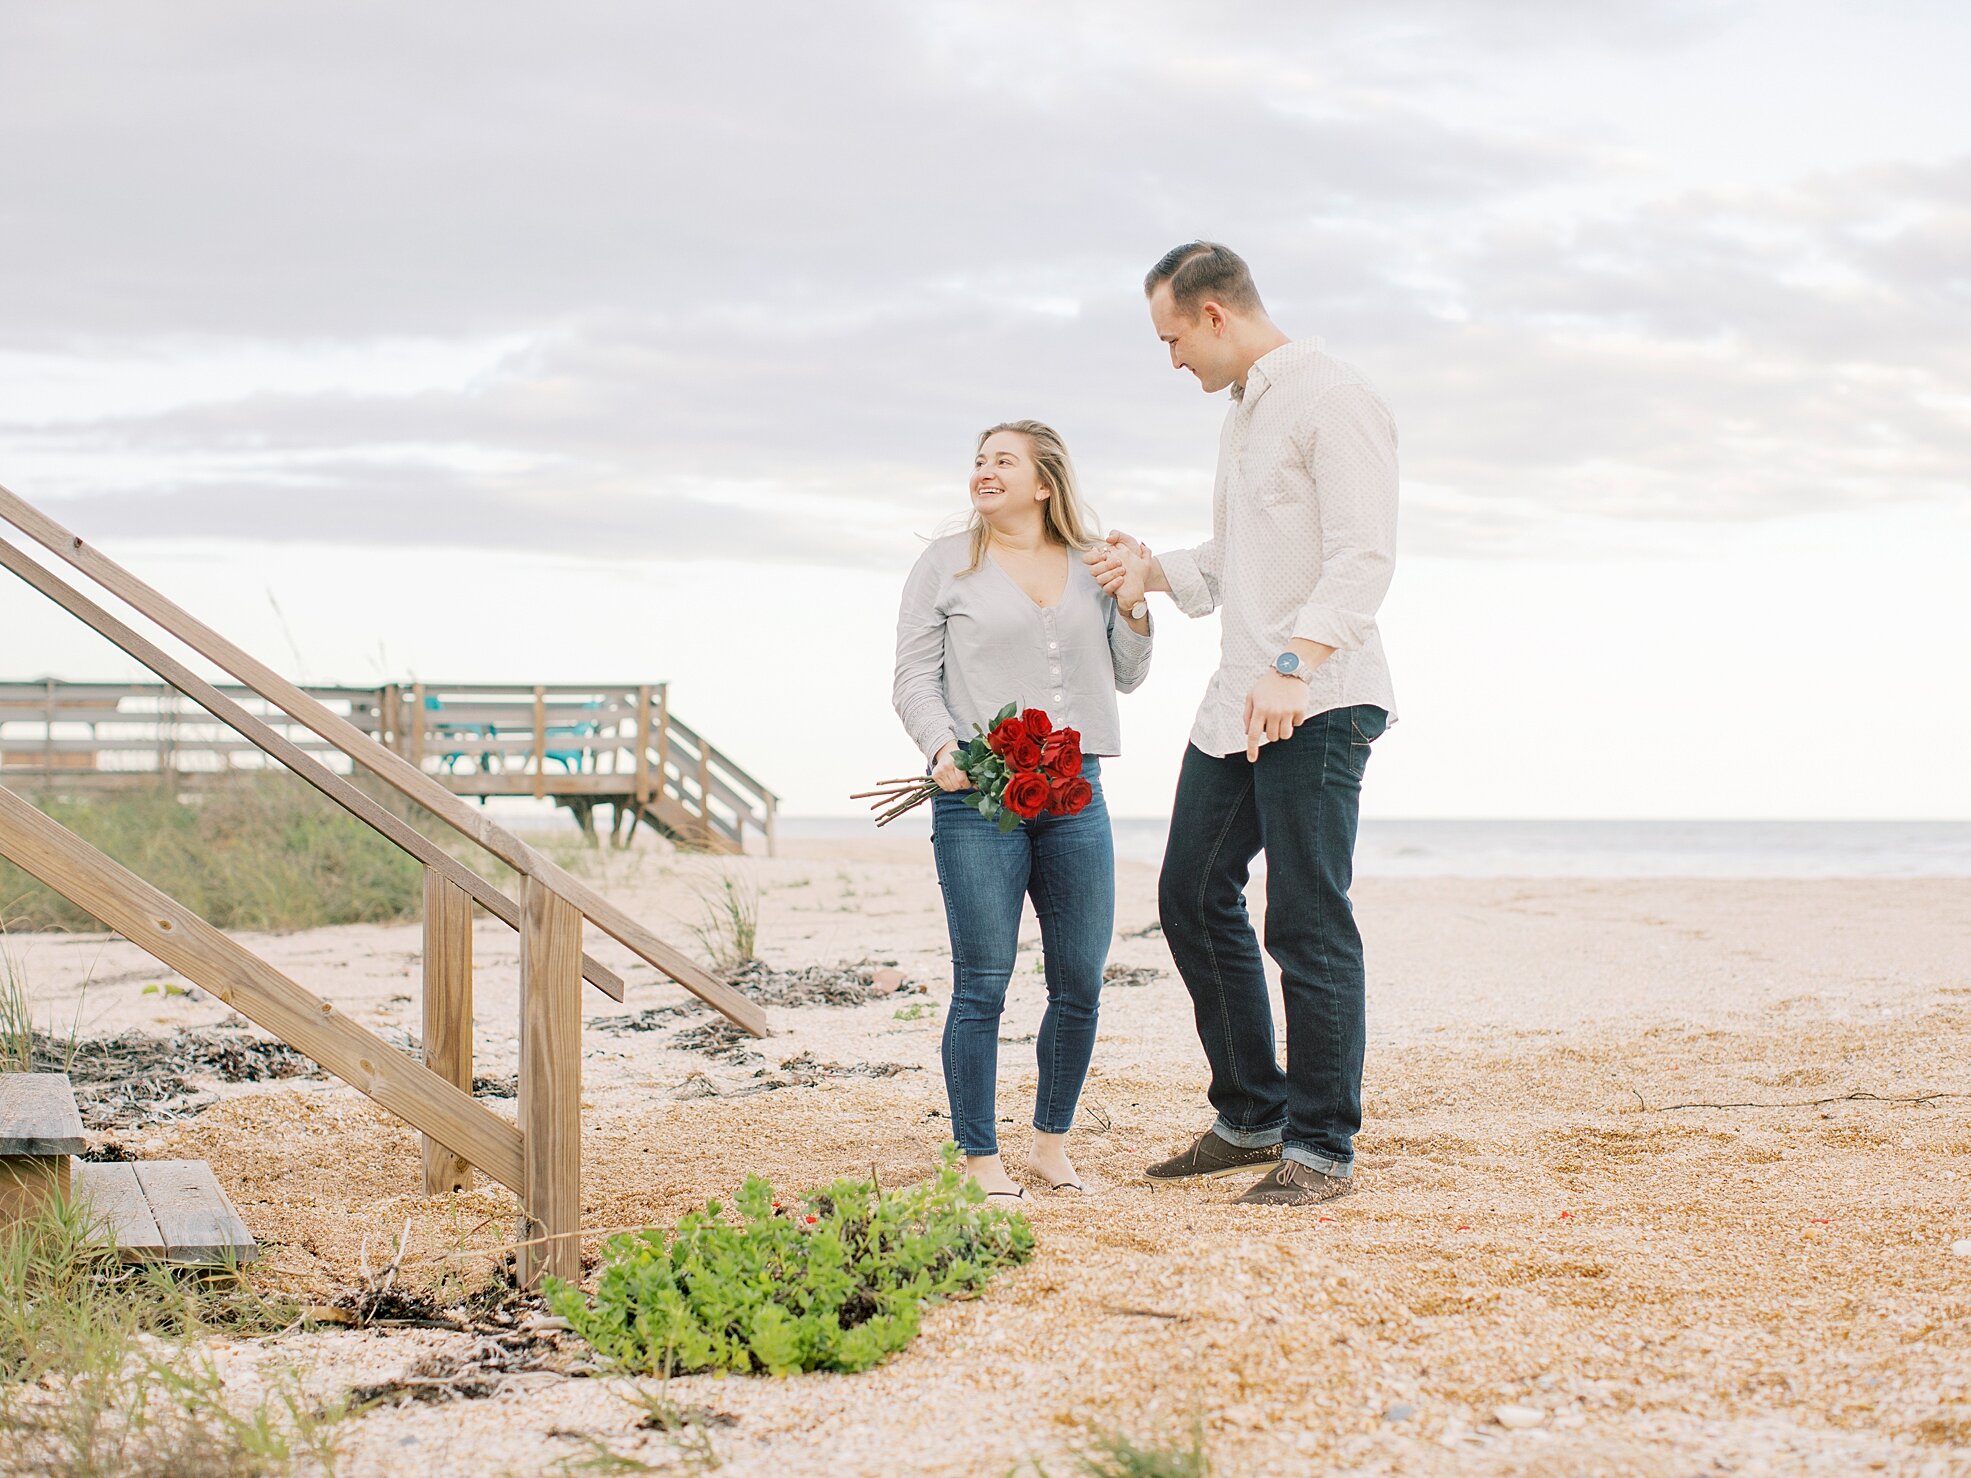 Proposal Photography in Ponte Vedra Beach, Florida - Lisa Silva Photography- Jacksonville, St. Augustine, Ponte Vedra Beach, Amelia Island, Florida Fine Art Film Wedding Photography_0012.jpg